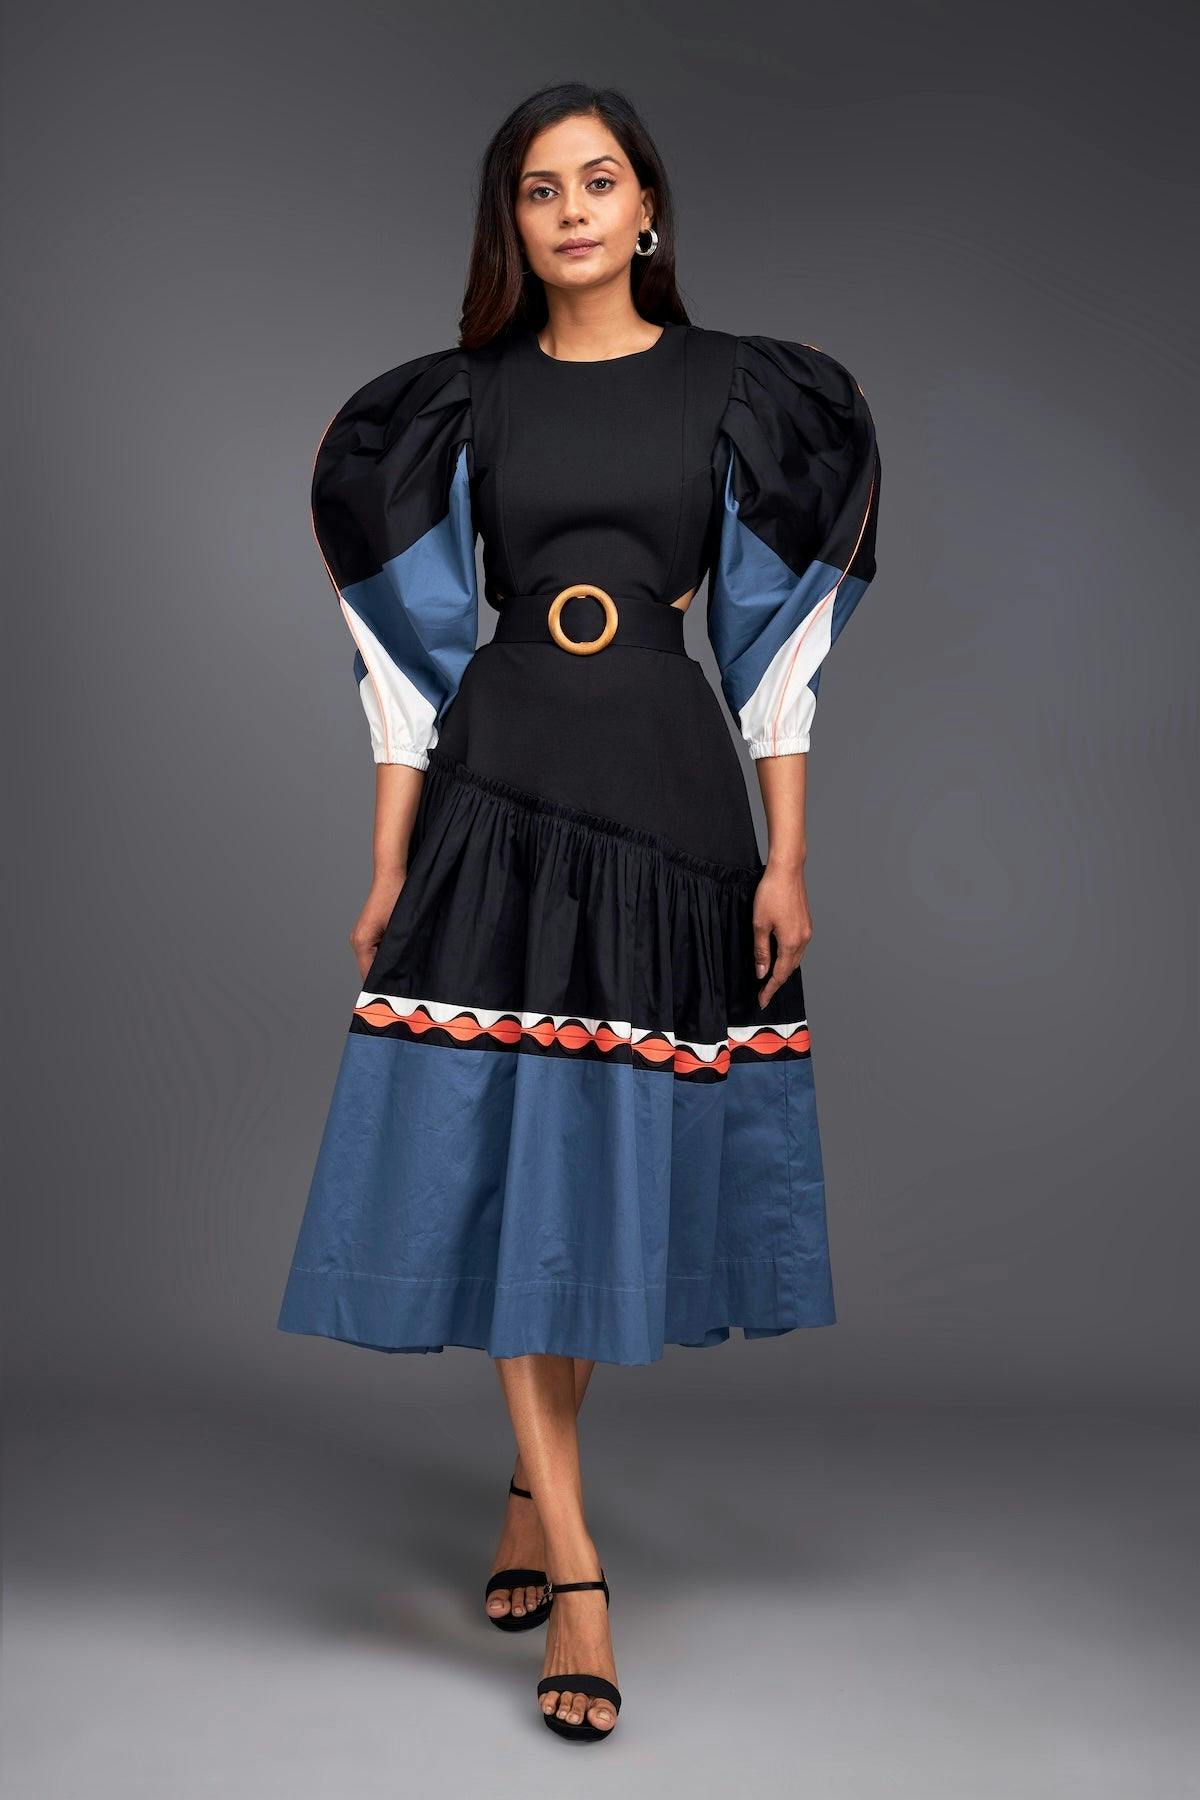 Colour Block Side Cutout Dress, a product by Deepika Arora